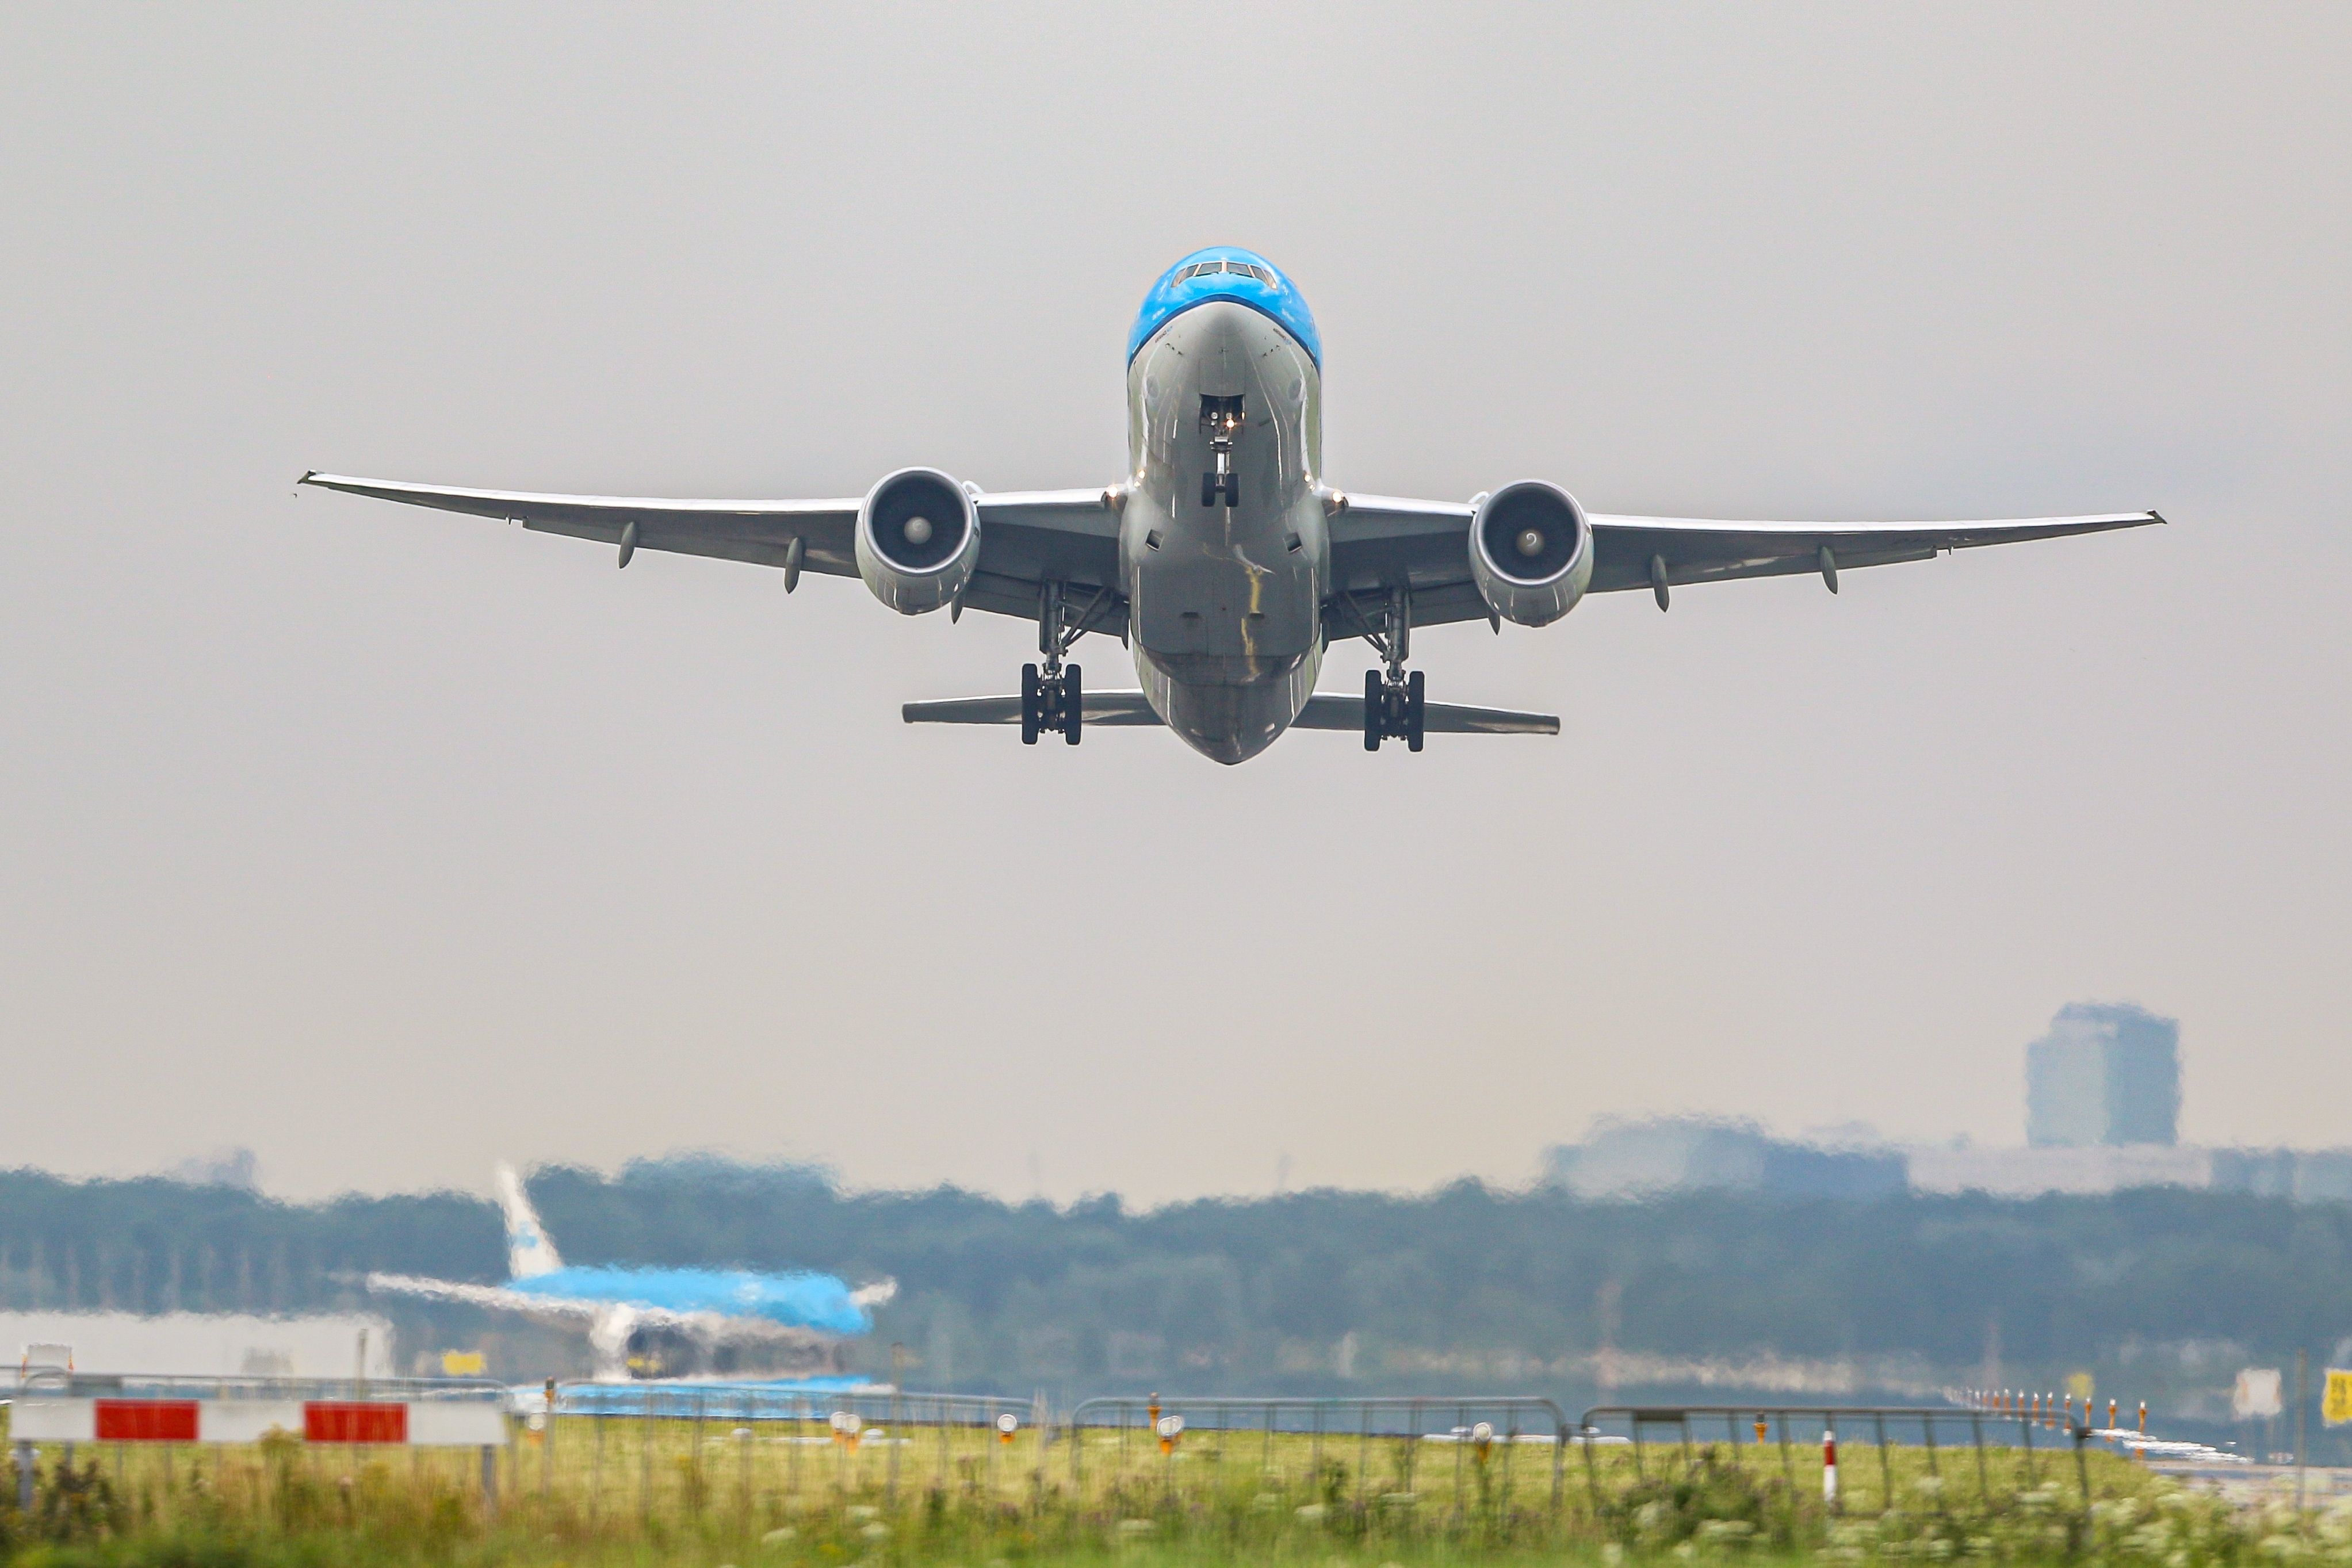 KLM aircraft landing at Amsterdam Schiphol Airport